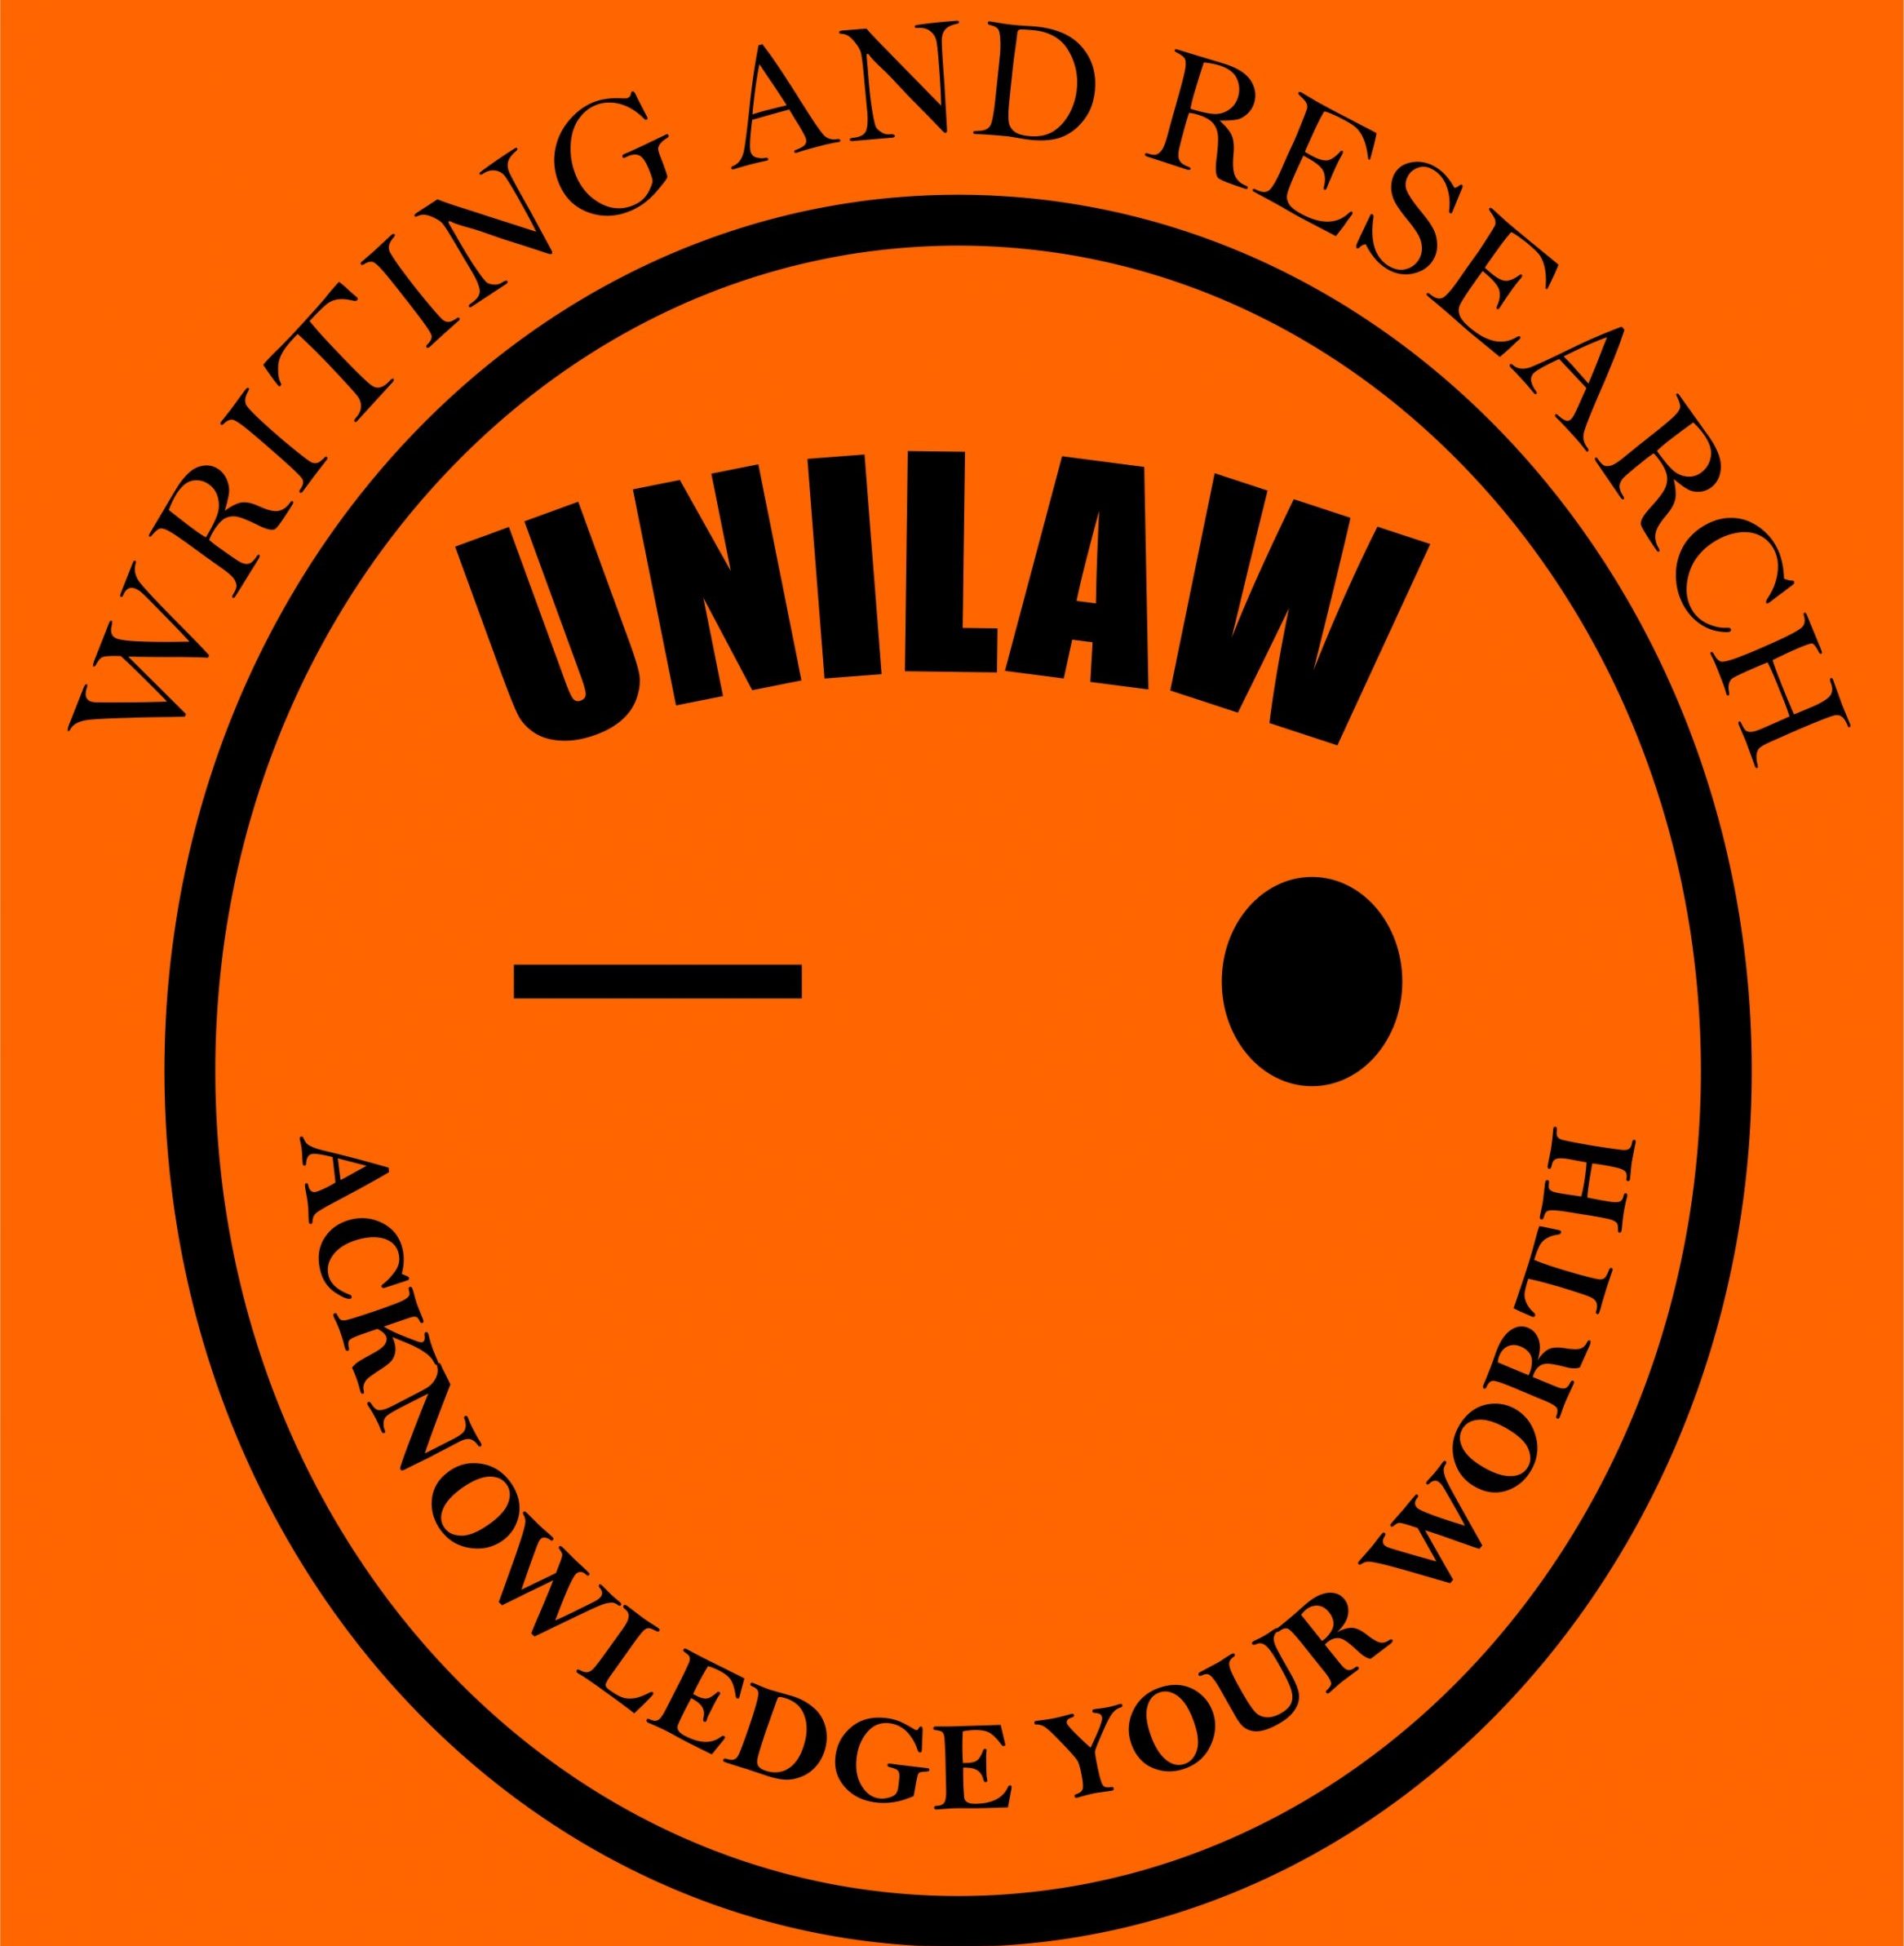 University of Lusaka | LAW SCHOOL | UNILAW